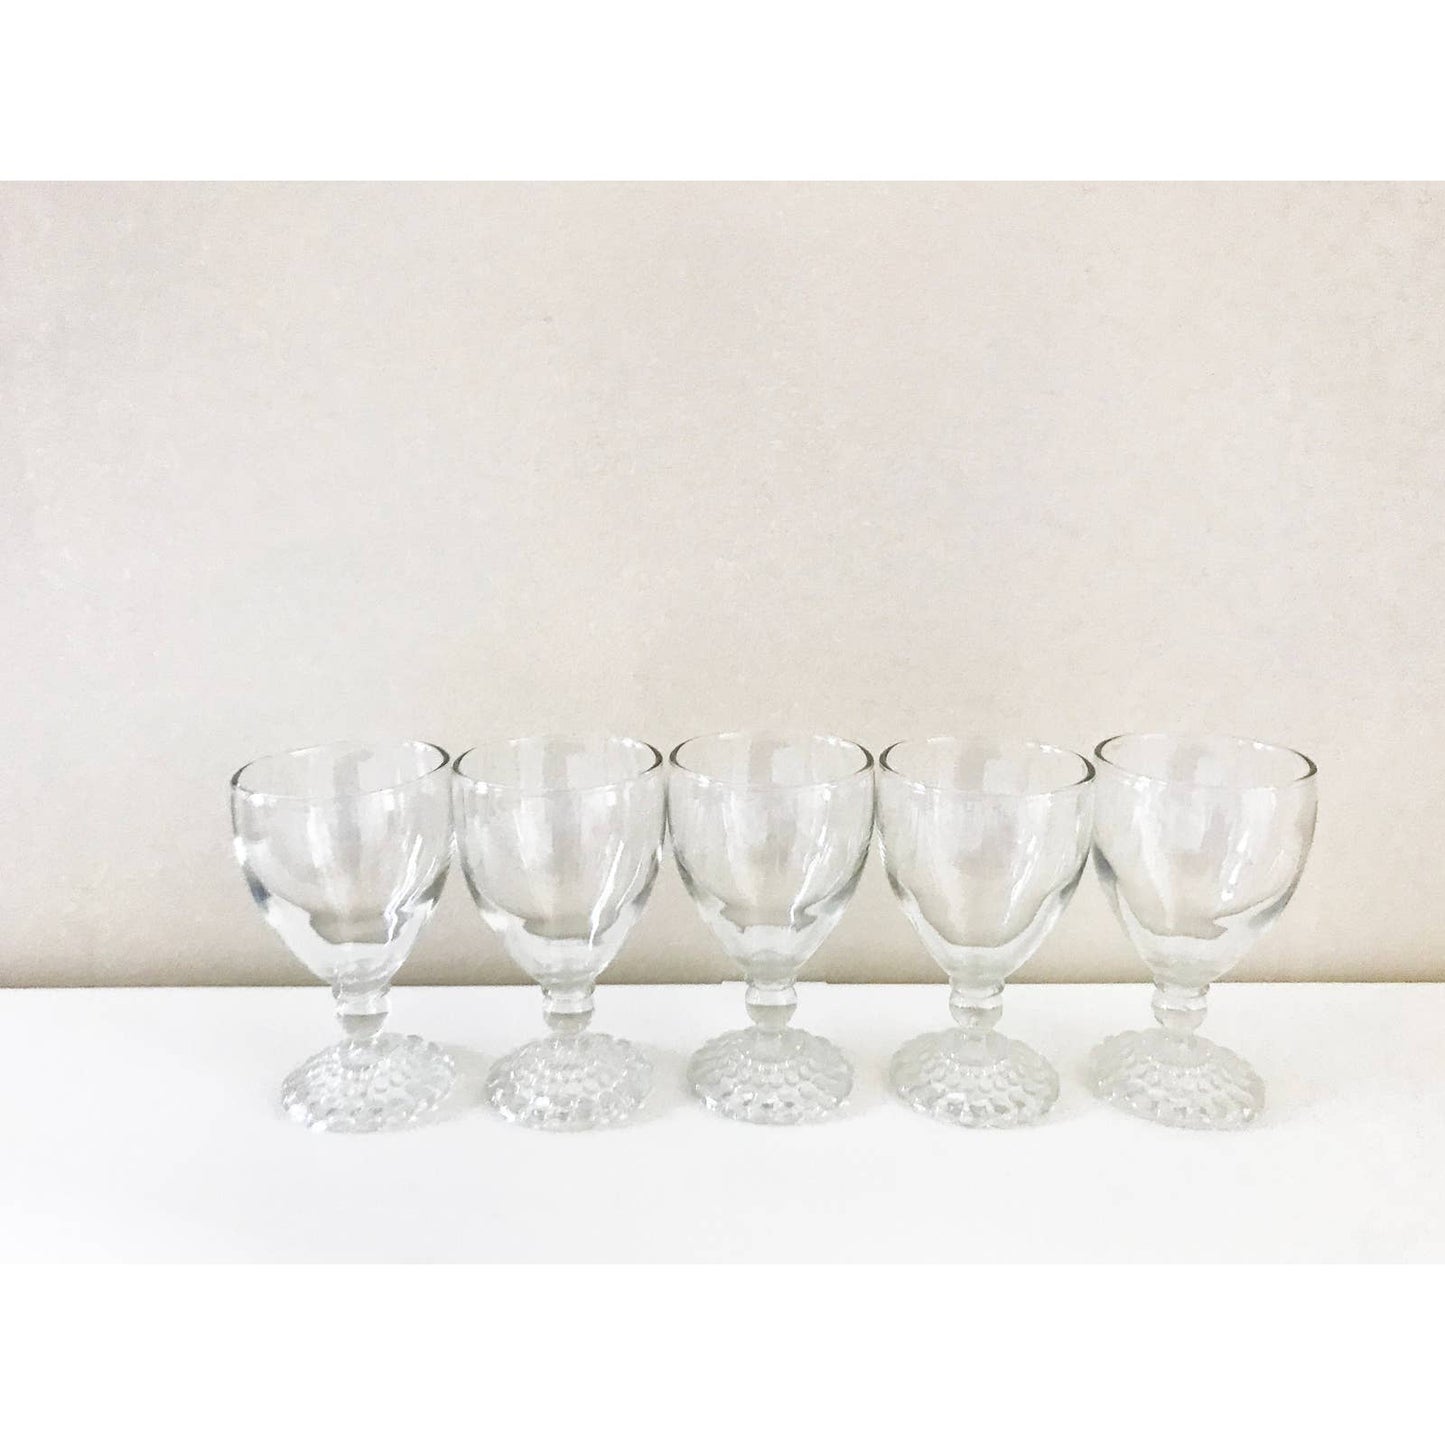 Decorative Mini Shot Clear Wine Drinking Glassed - Set of 5 - Vintage